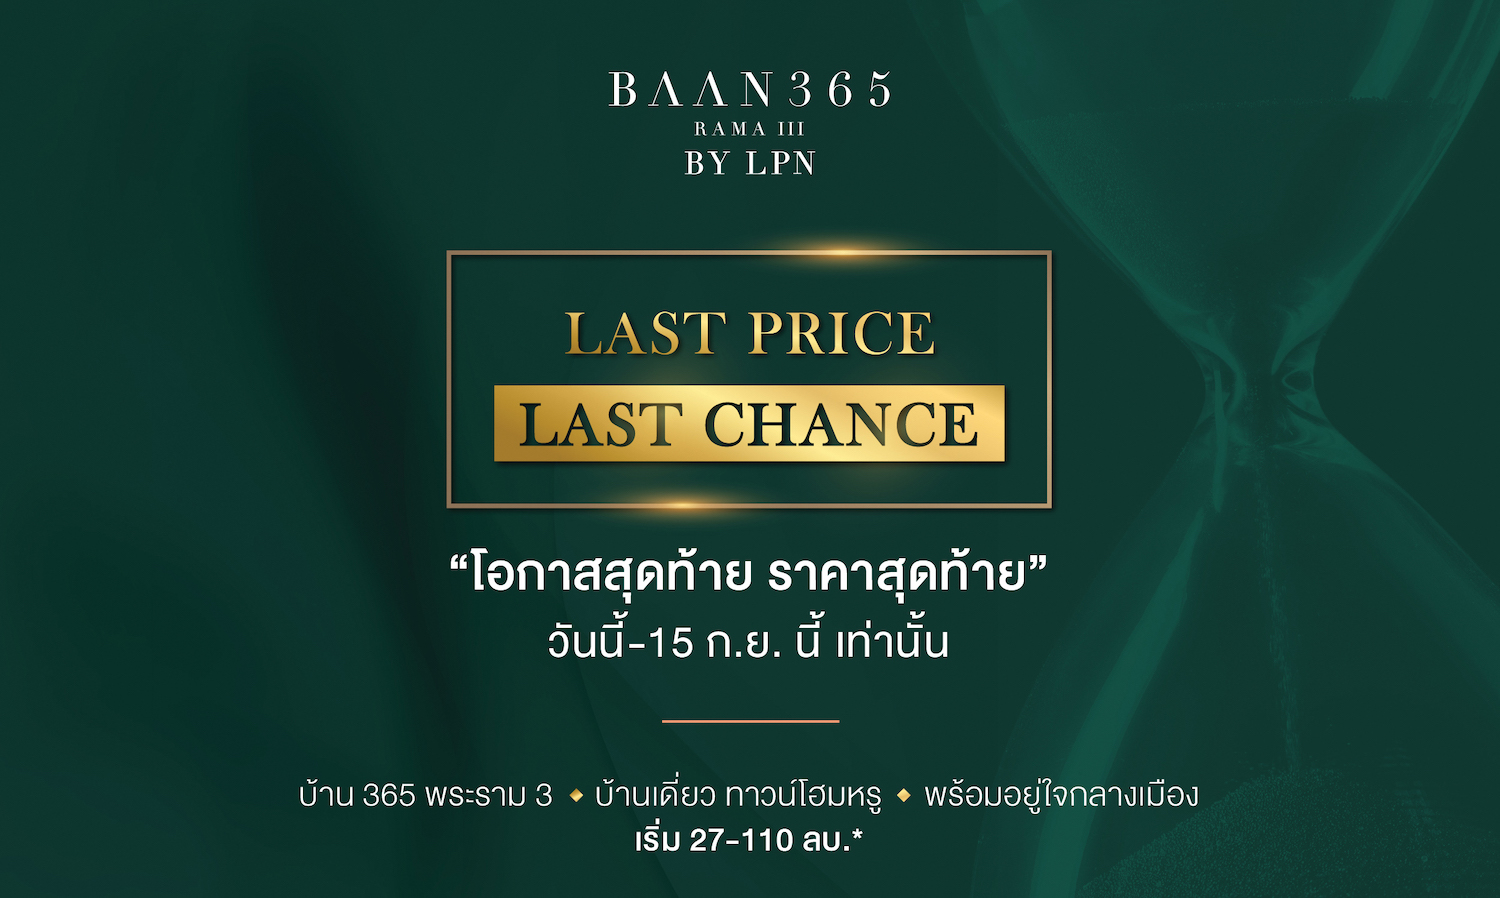 BAAN 365 RAMA III  By LPN เปิดตัวแคมเปญ LAST PRICE LAST CHANCE ราคาสุดท้าย วันนี้ -15 ก.ย.นี้ 